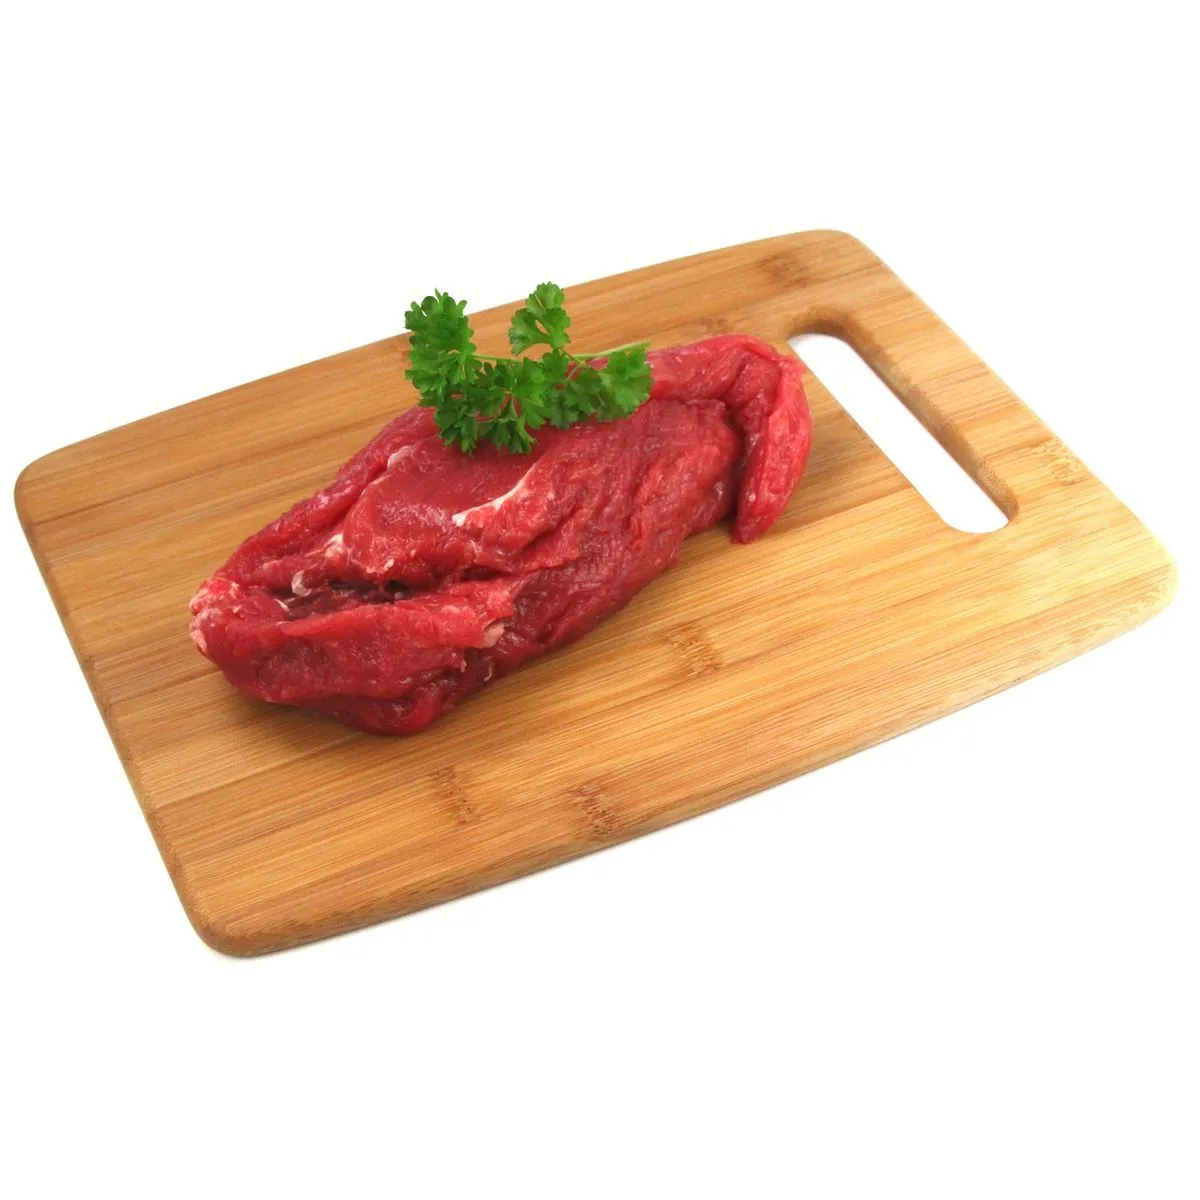 viande bovine : pièce à fondue ou brochettes